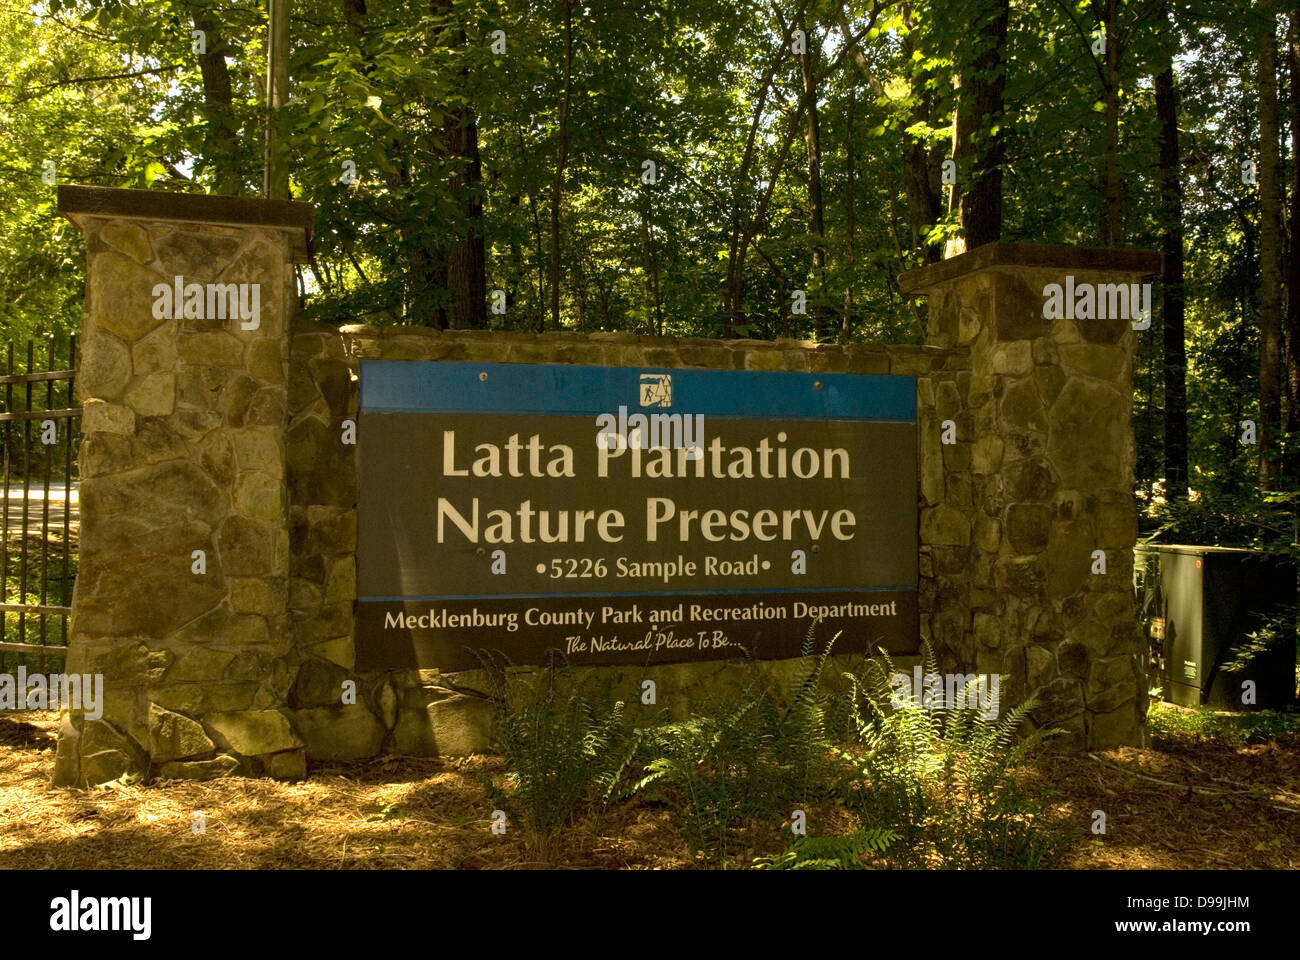 Latta Plantation Nature Preserve unterzeichnen Huntersville North Carolina USA 28078 Stockfoto